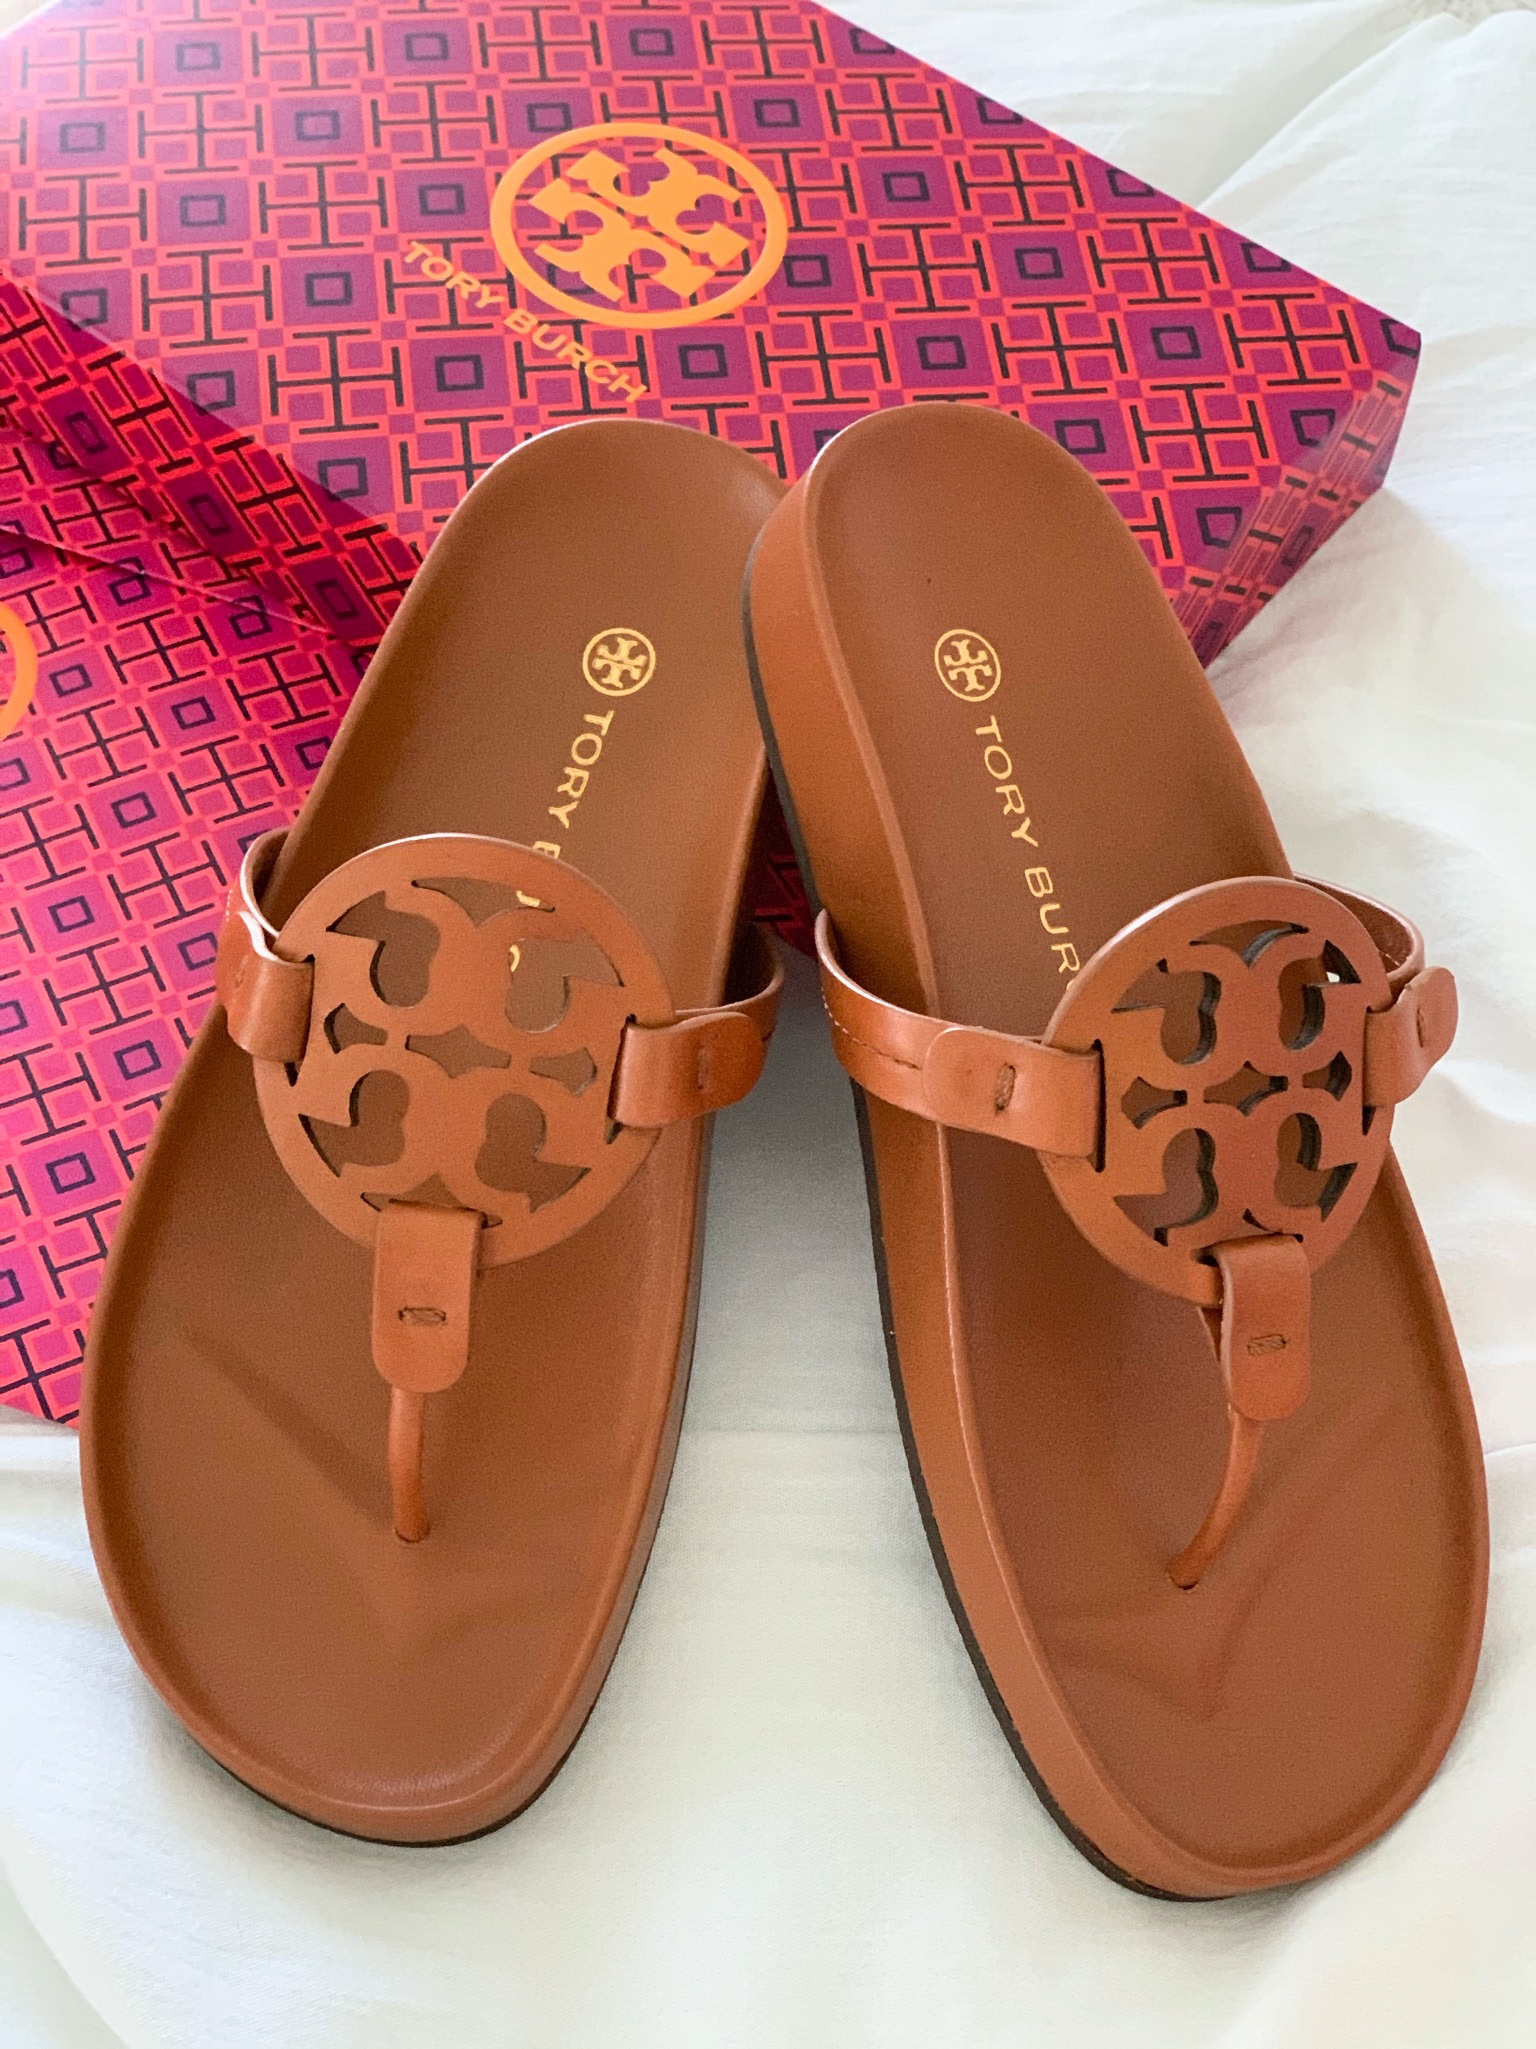 Tory Burch Semi-Annual sale: Shop Tory Burch sandals, purses and more